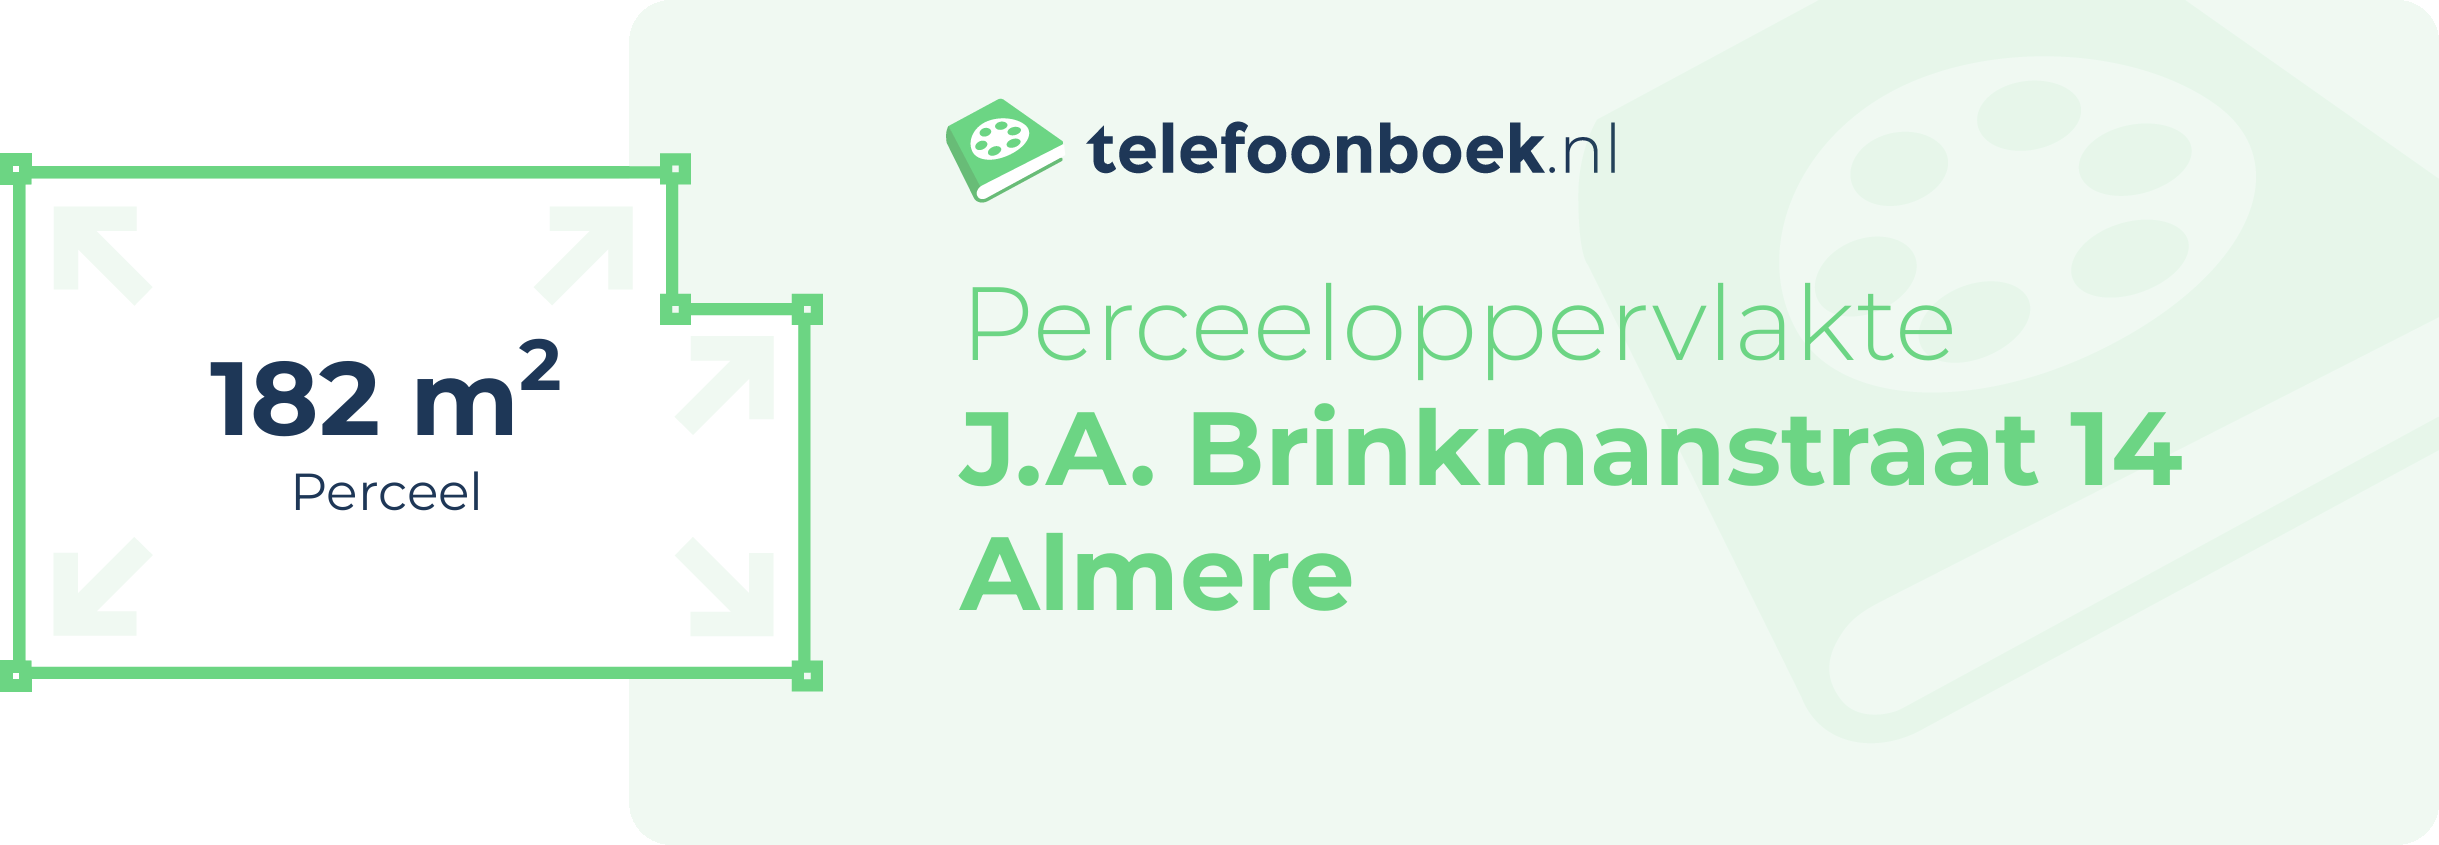 Perceeloppervlakte J.A. Brinkmanstraat 14 Almere